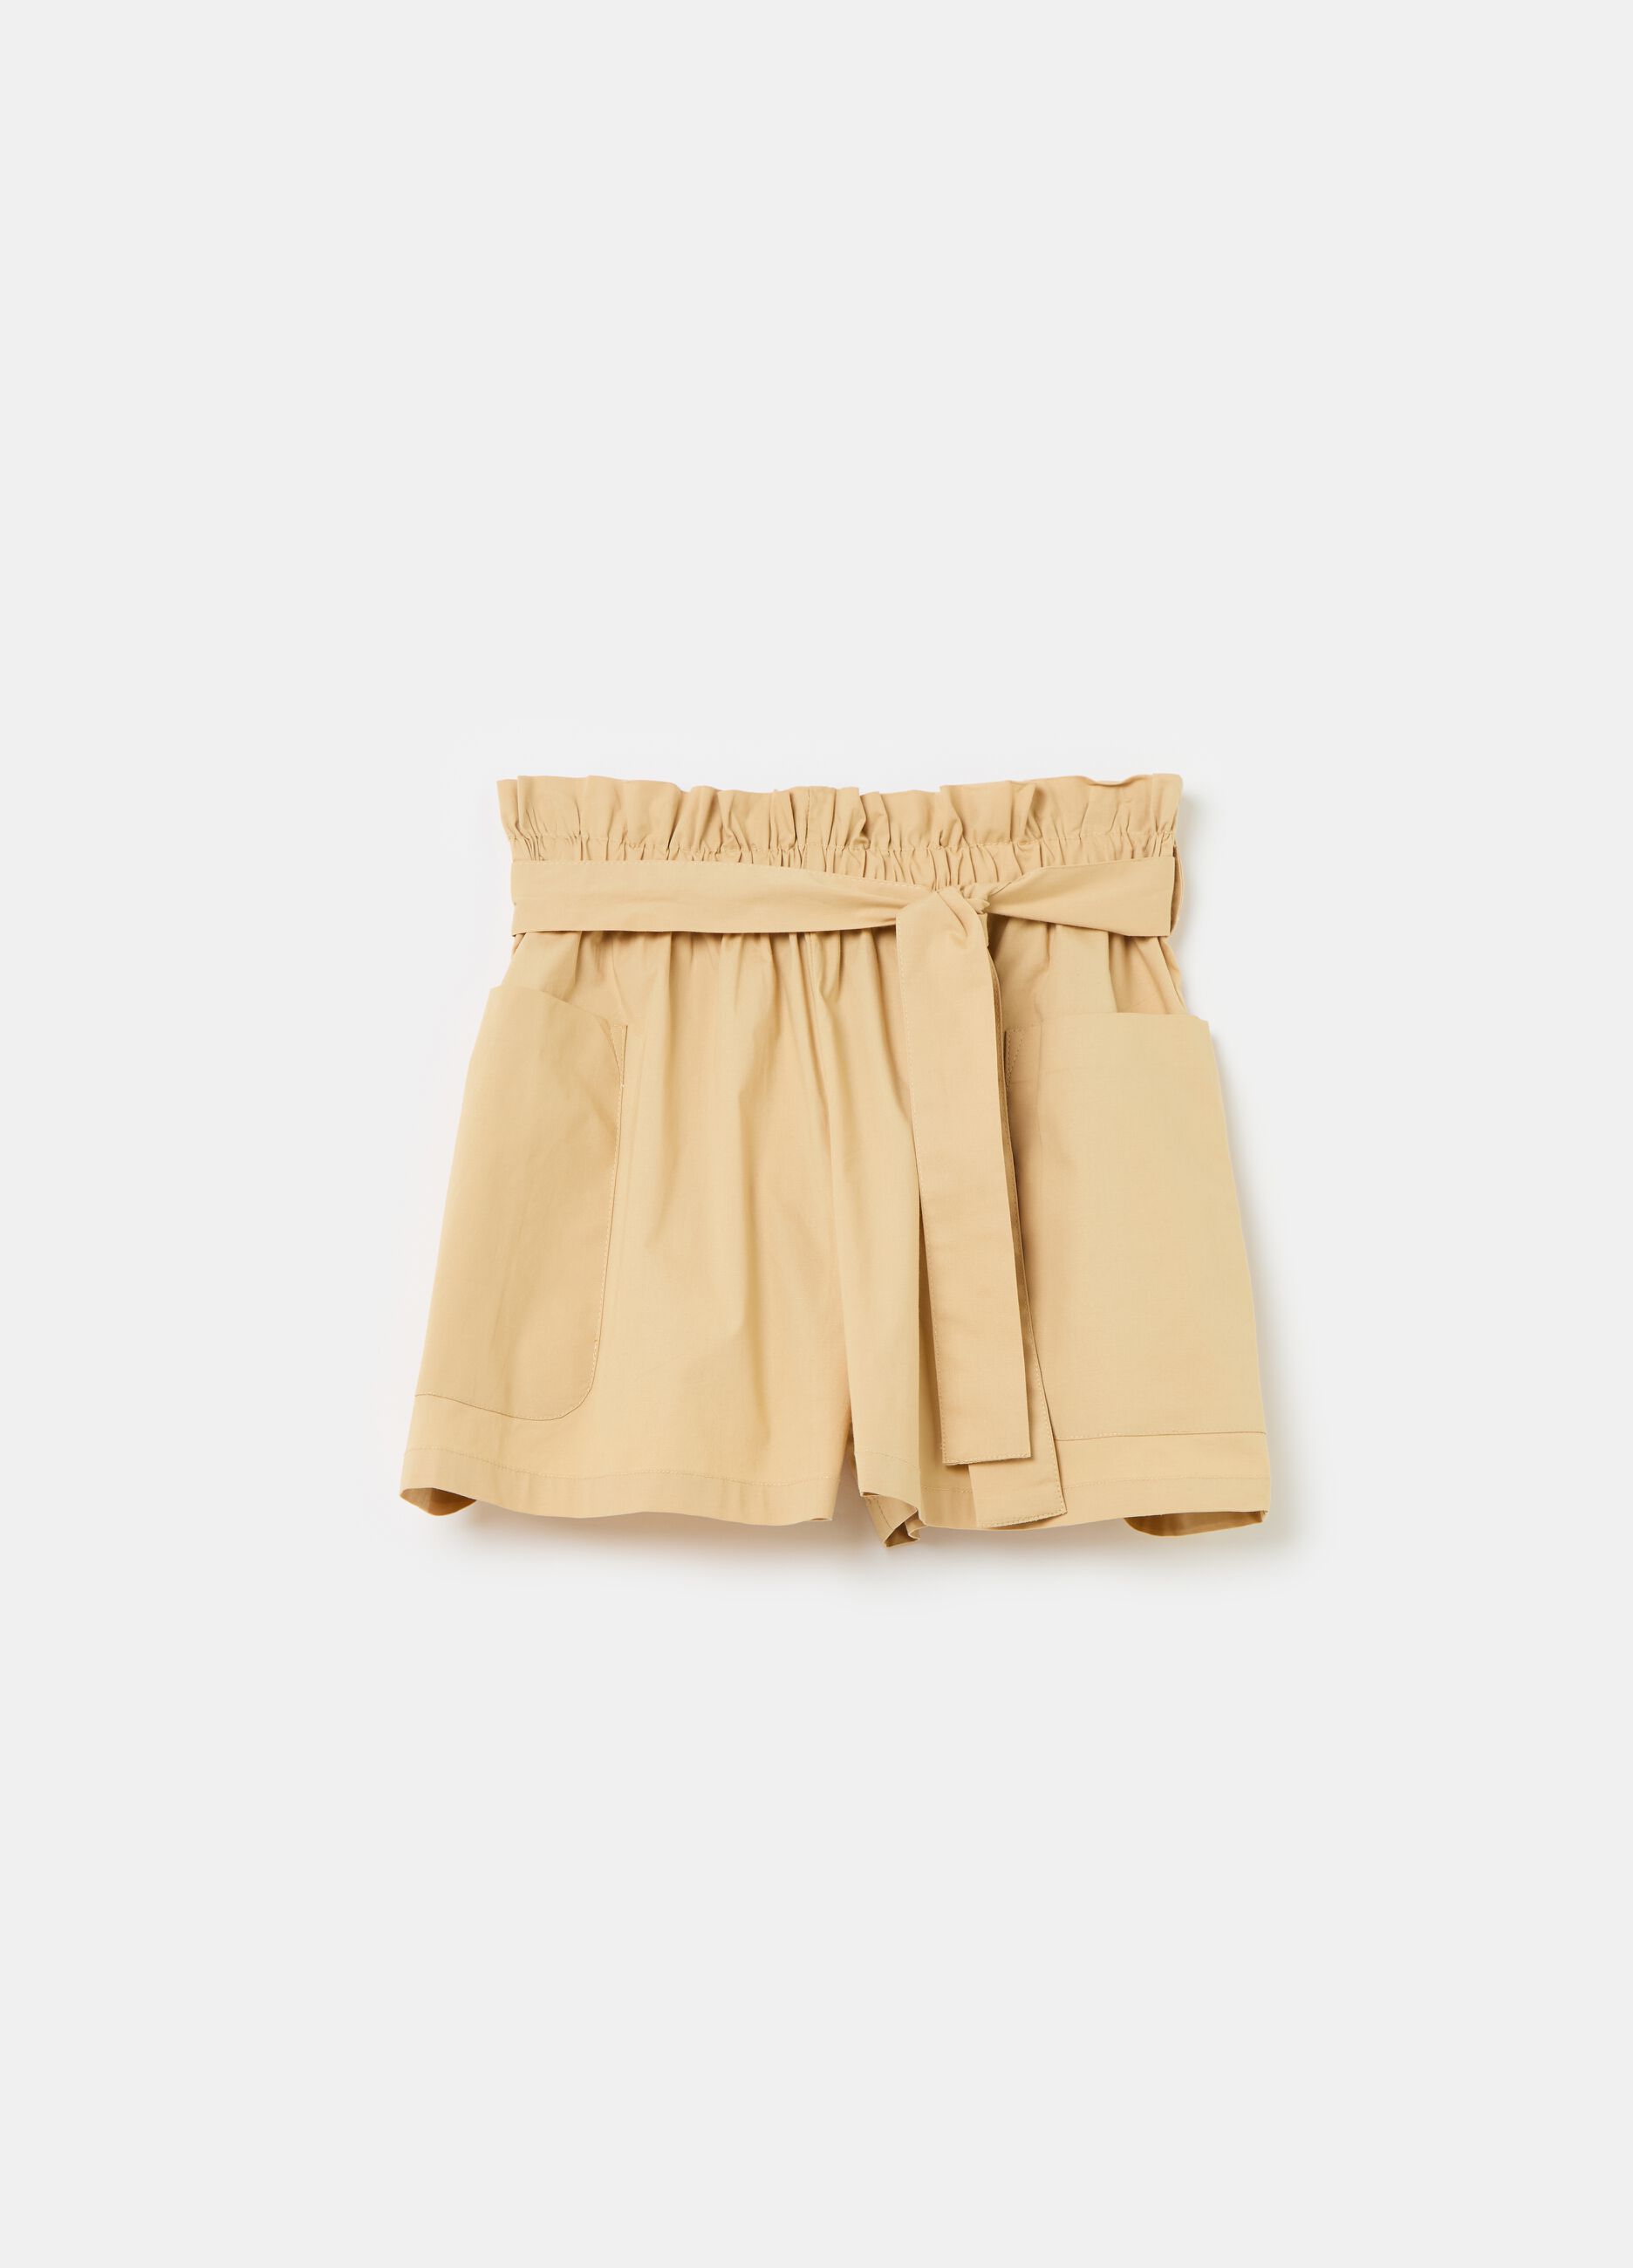 Paper bag shorts with belt